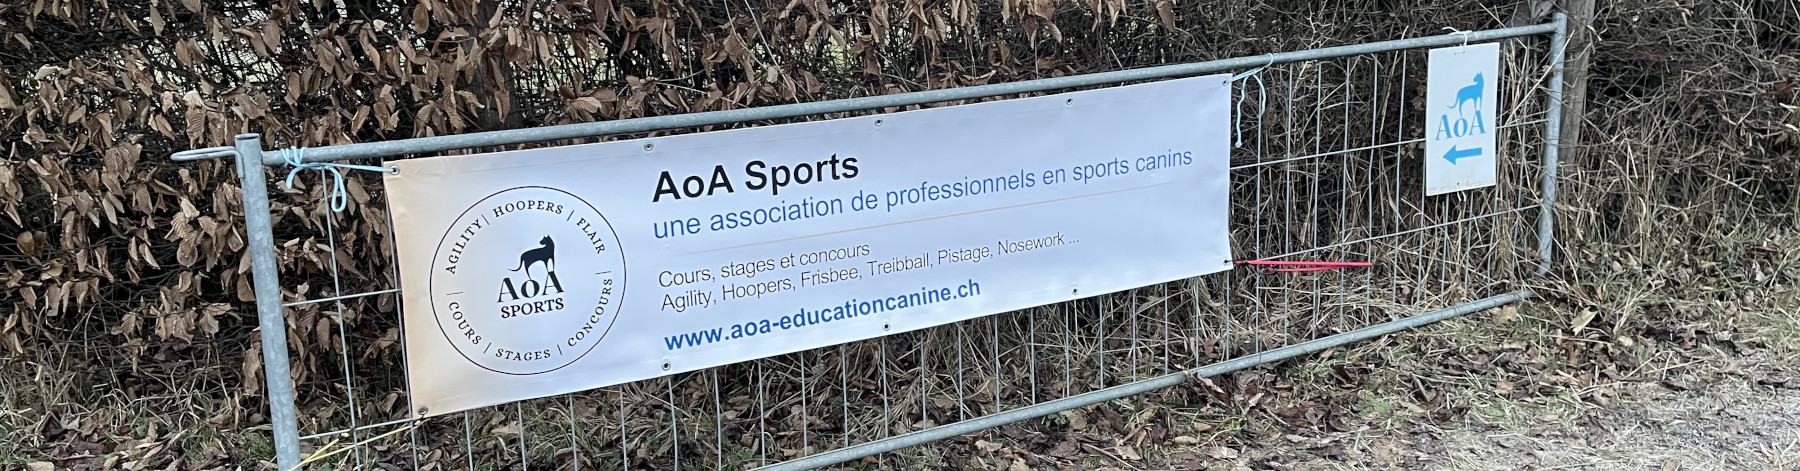 Banderole AoA Sports au terrain d’agility / AoA Sports banner at the agility course - AoA Éducation canine